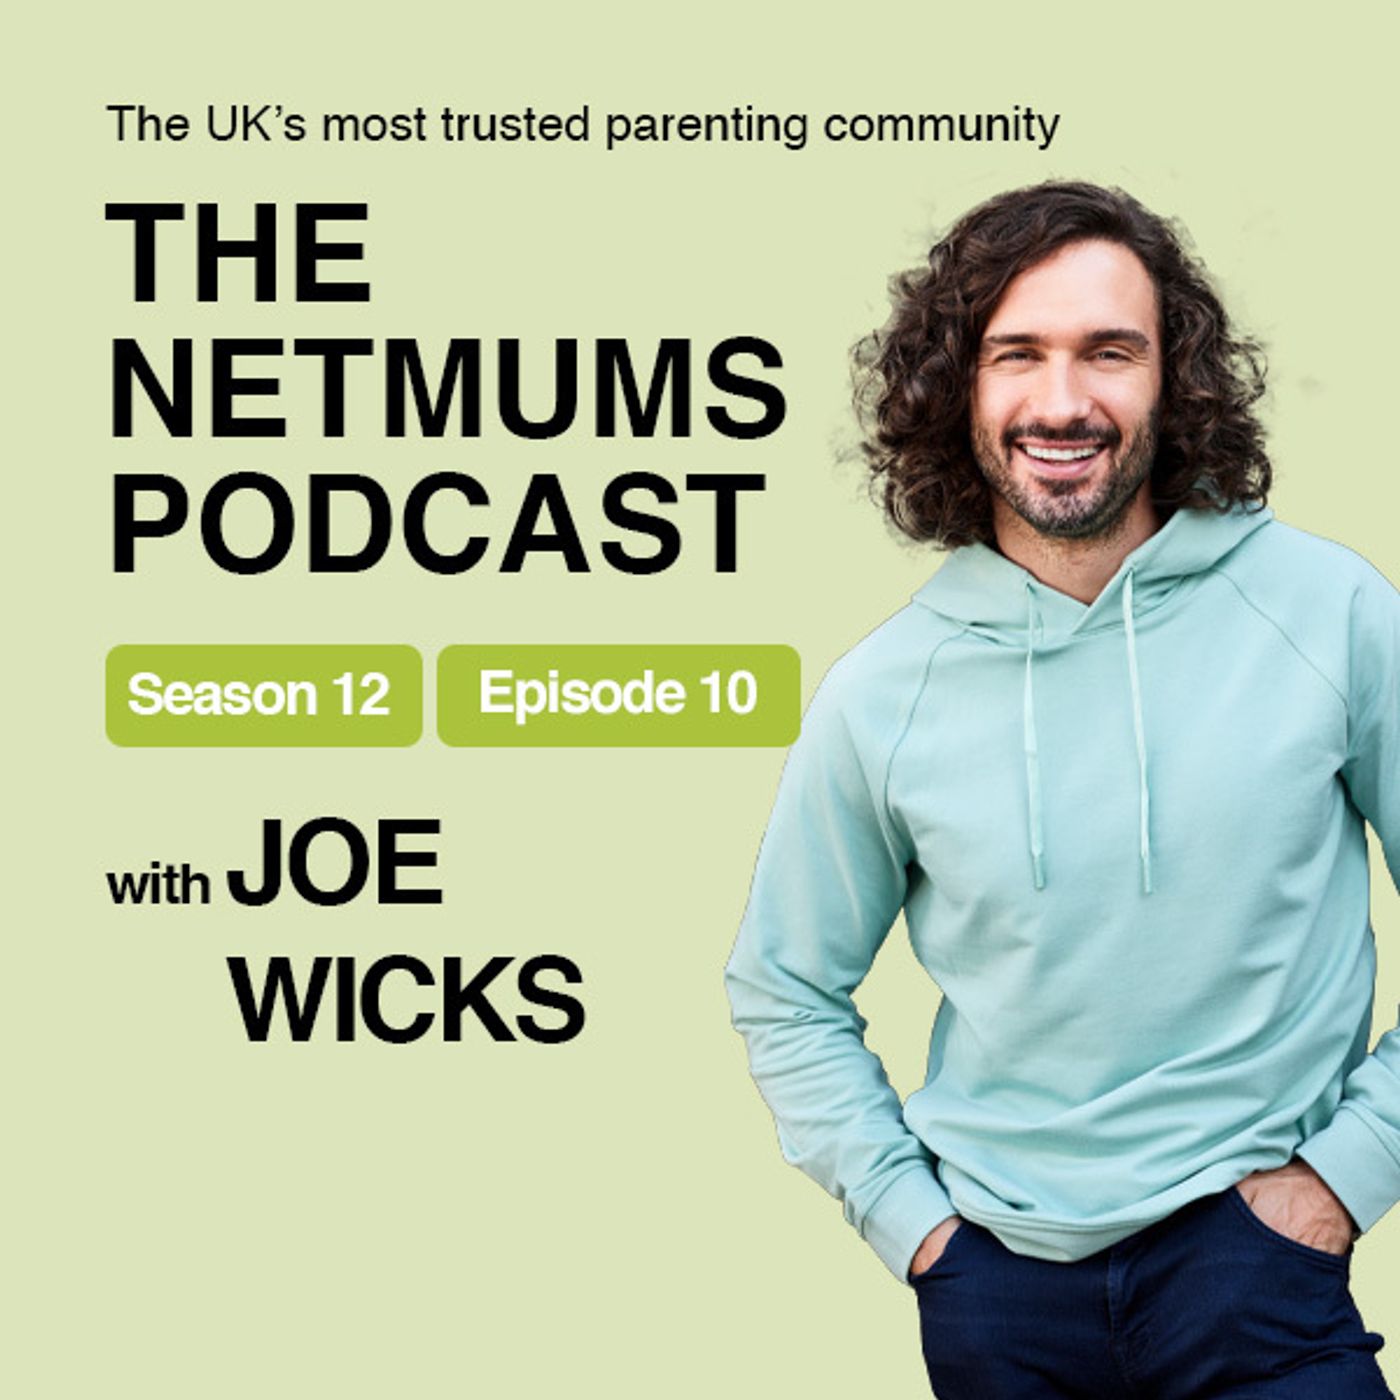 S12 Ep10: Joe Wicks: Gentle parenting and happy healthy bodies